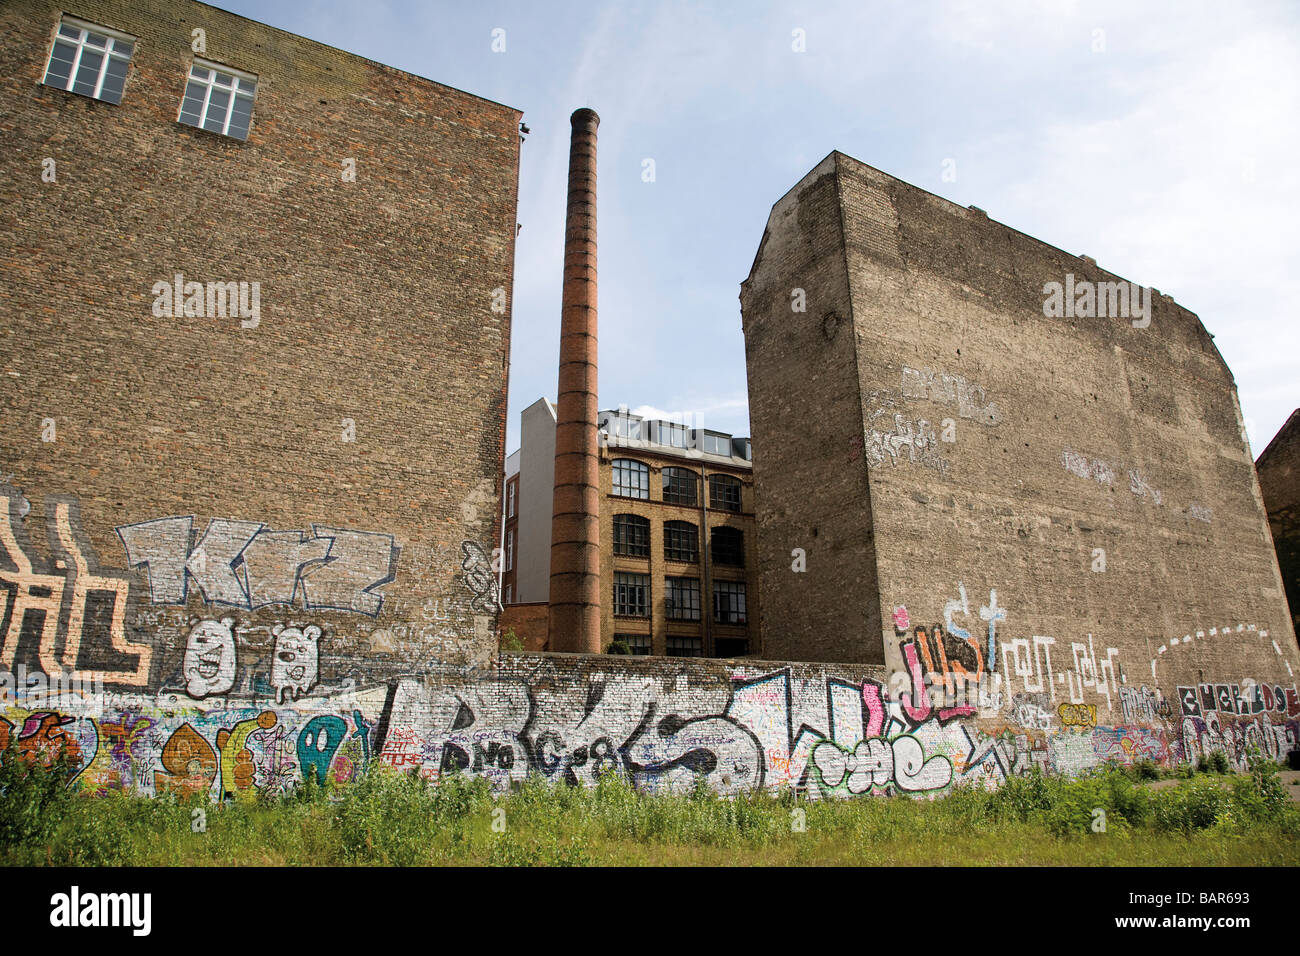 Deutschland, Berlin, alte Fabrikgelände, Graffiti an der Wand Stockfoto